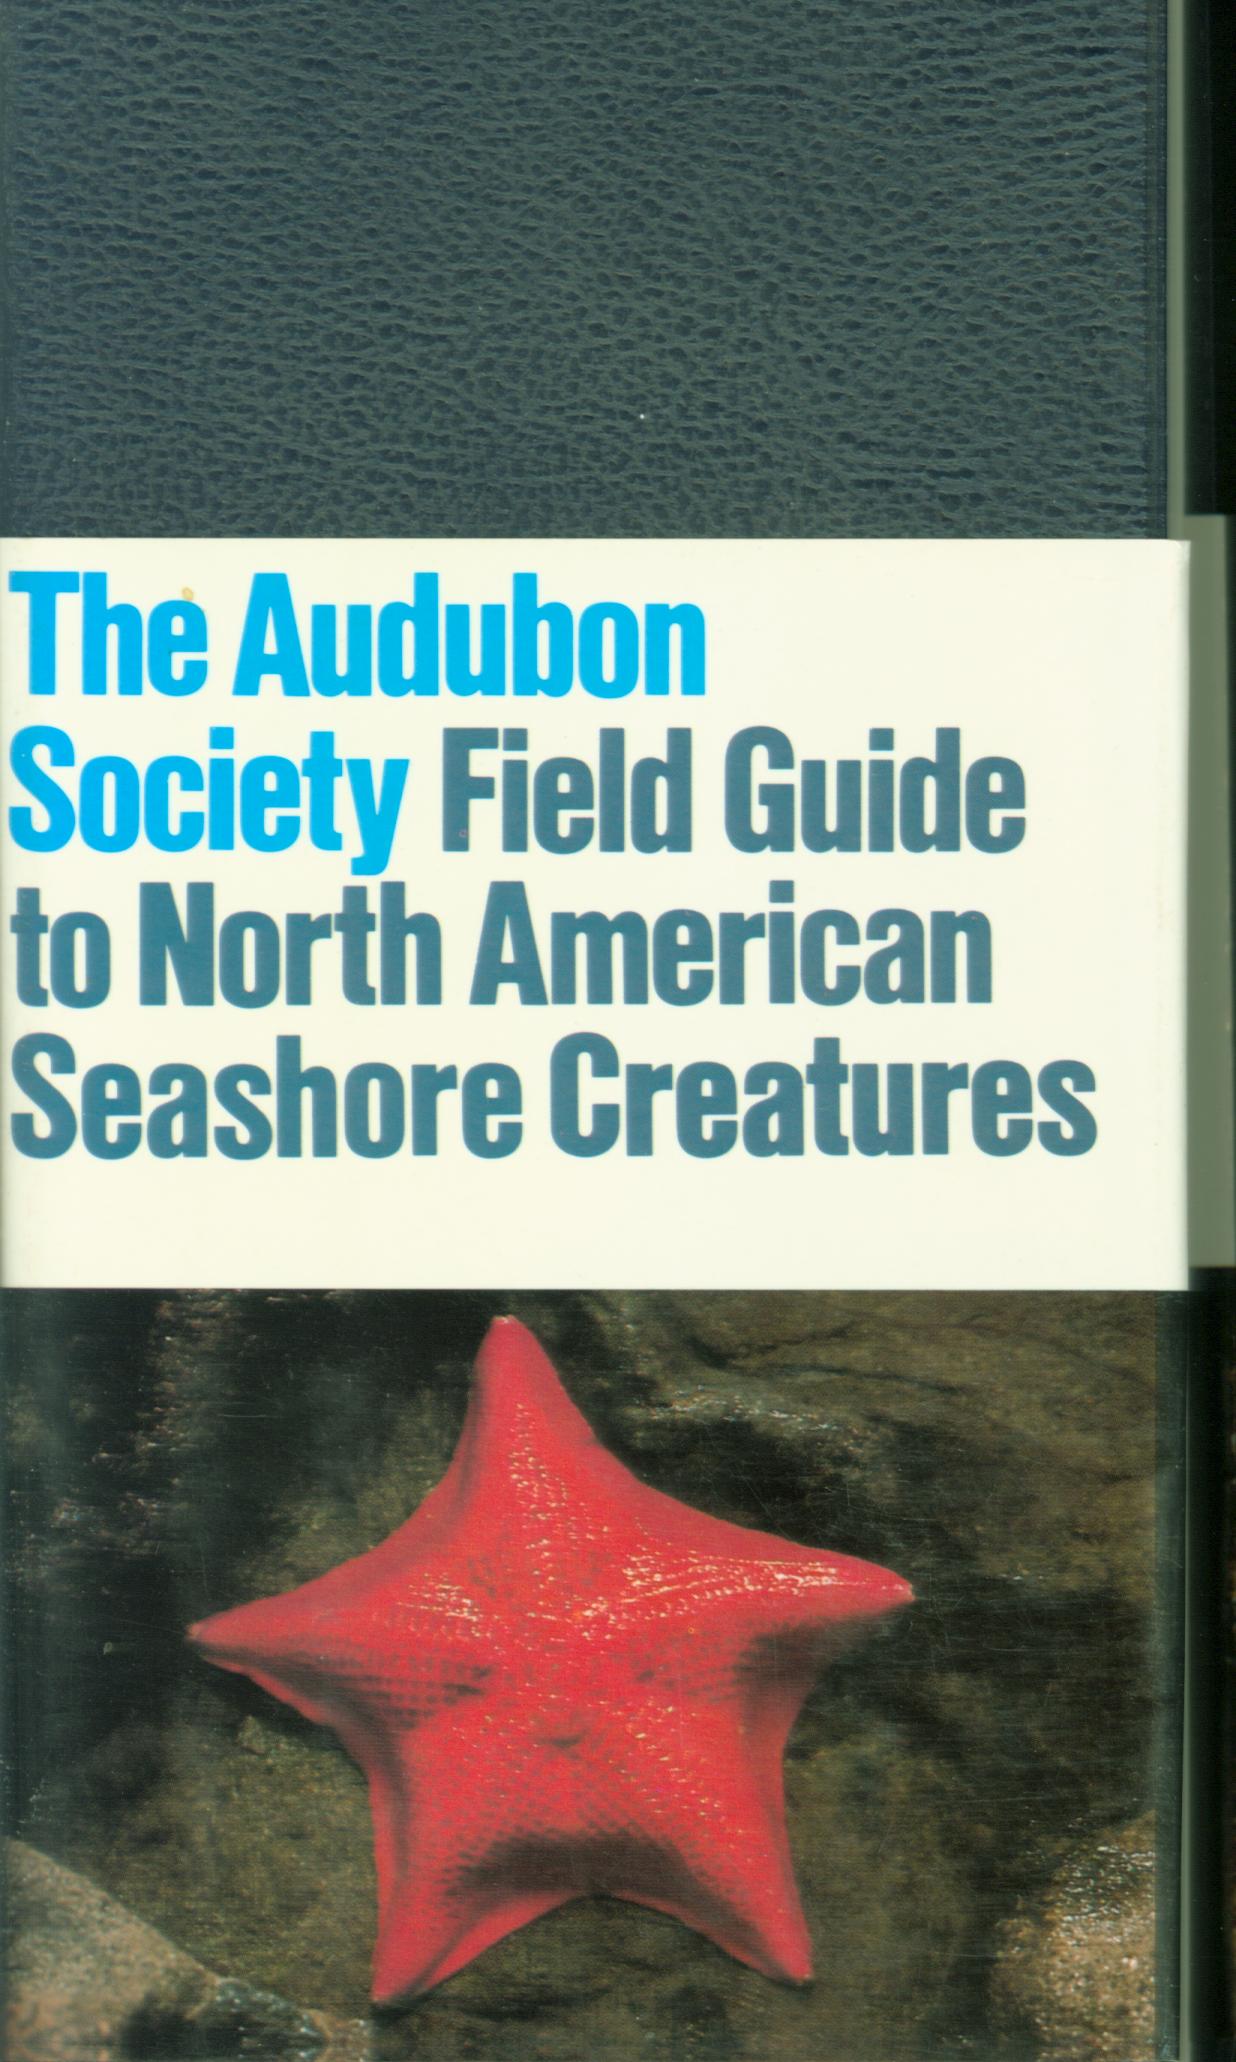 FIELD GUIDE TO NORTH AMERICAN SEASHORE CREATURES: The Audubon Society.